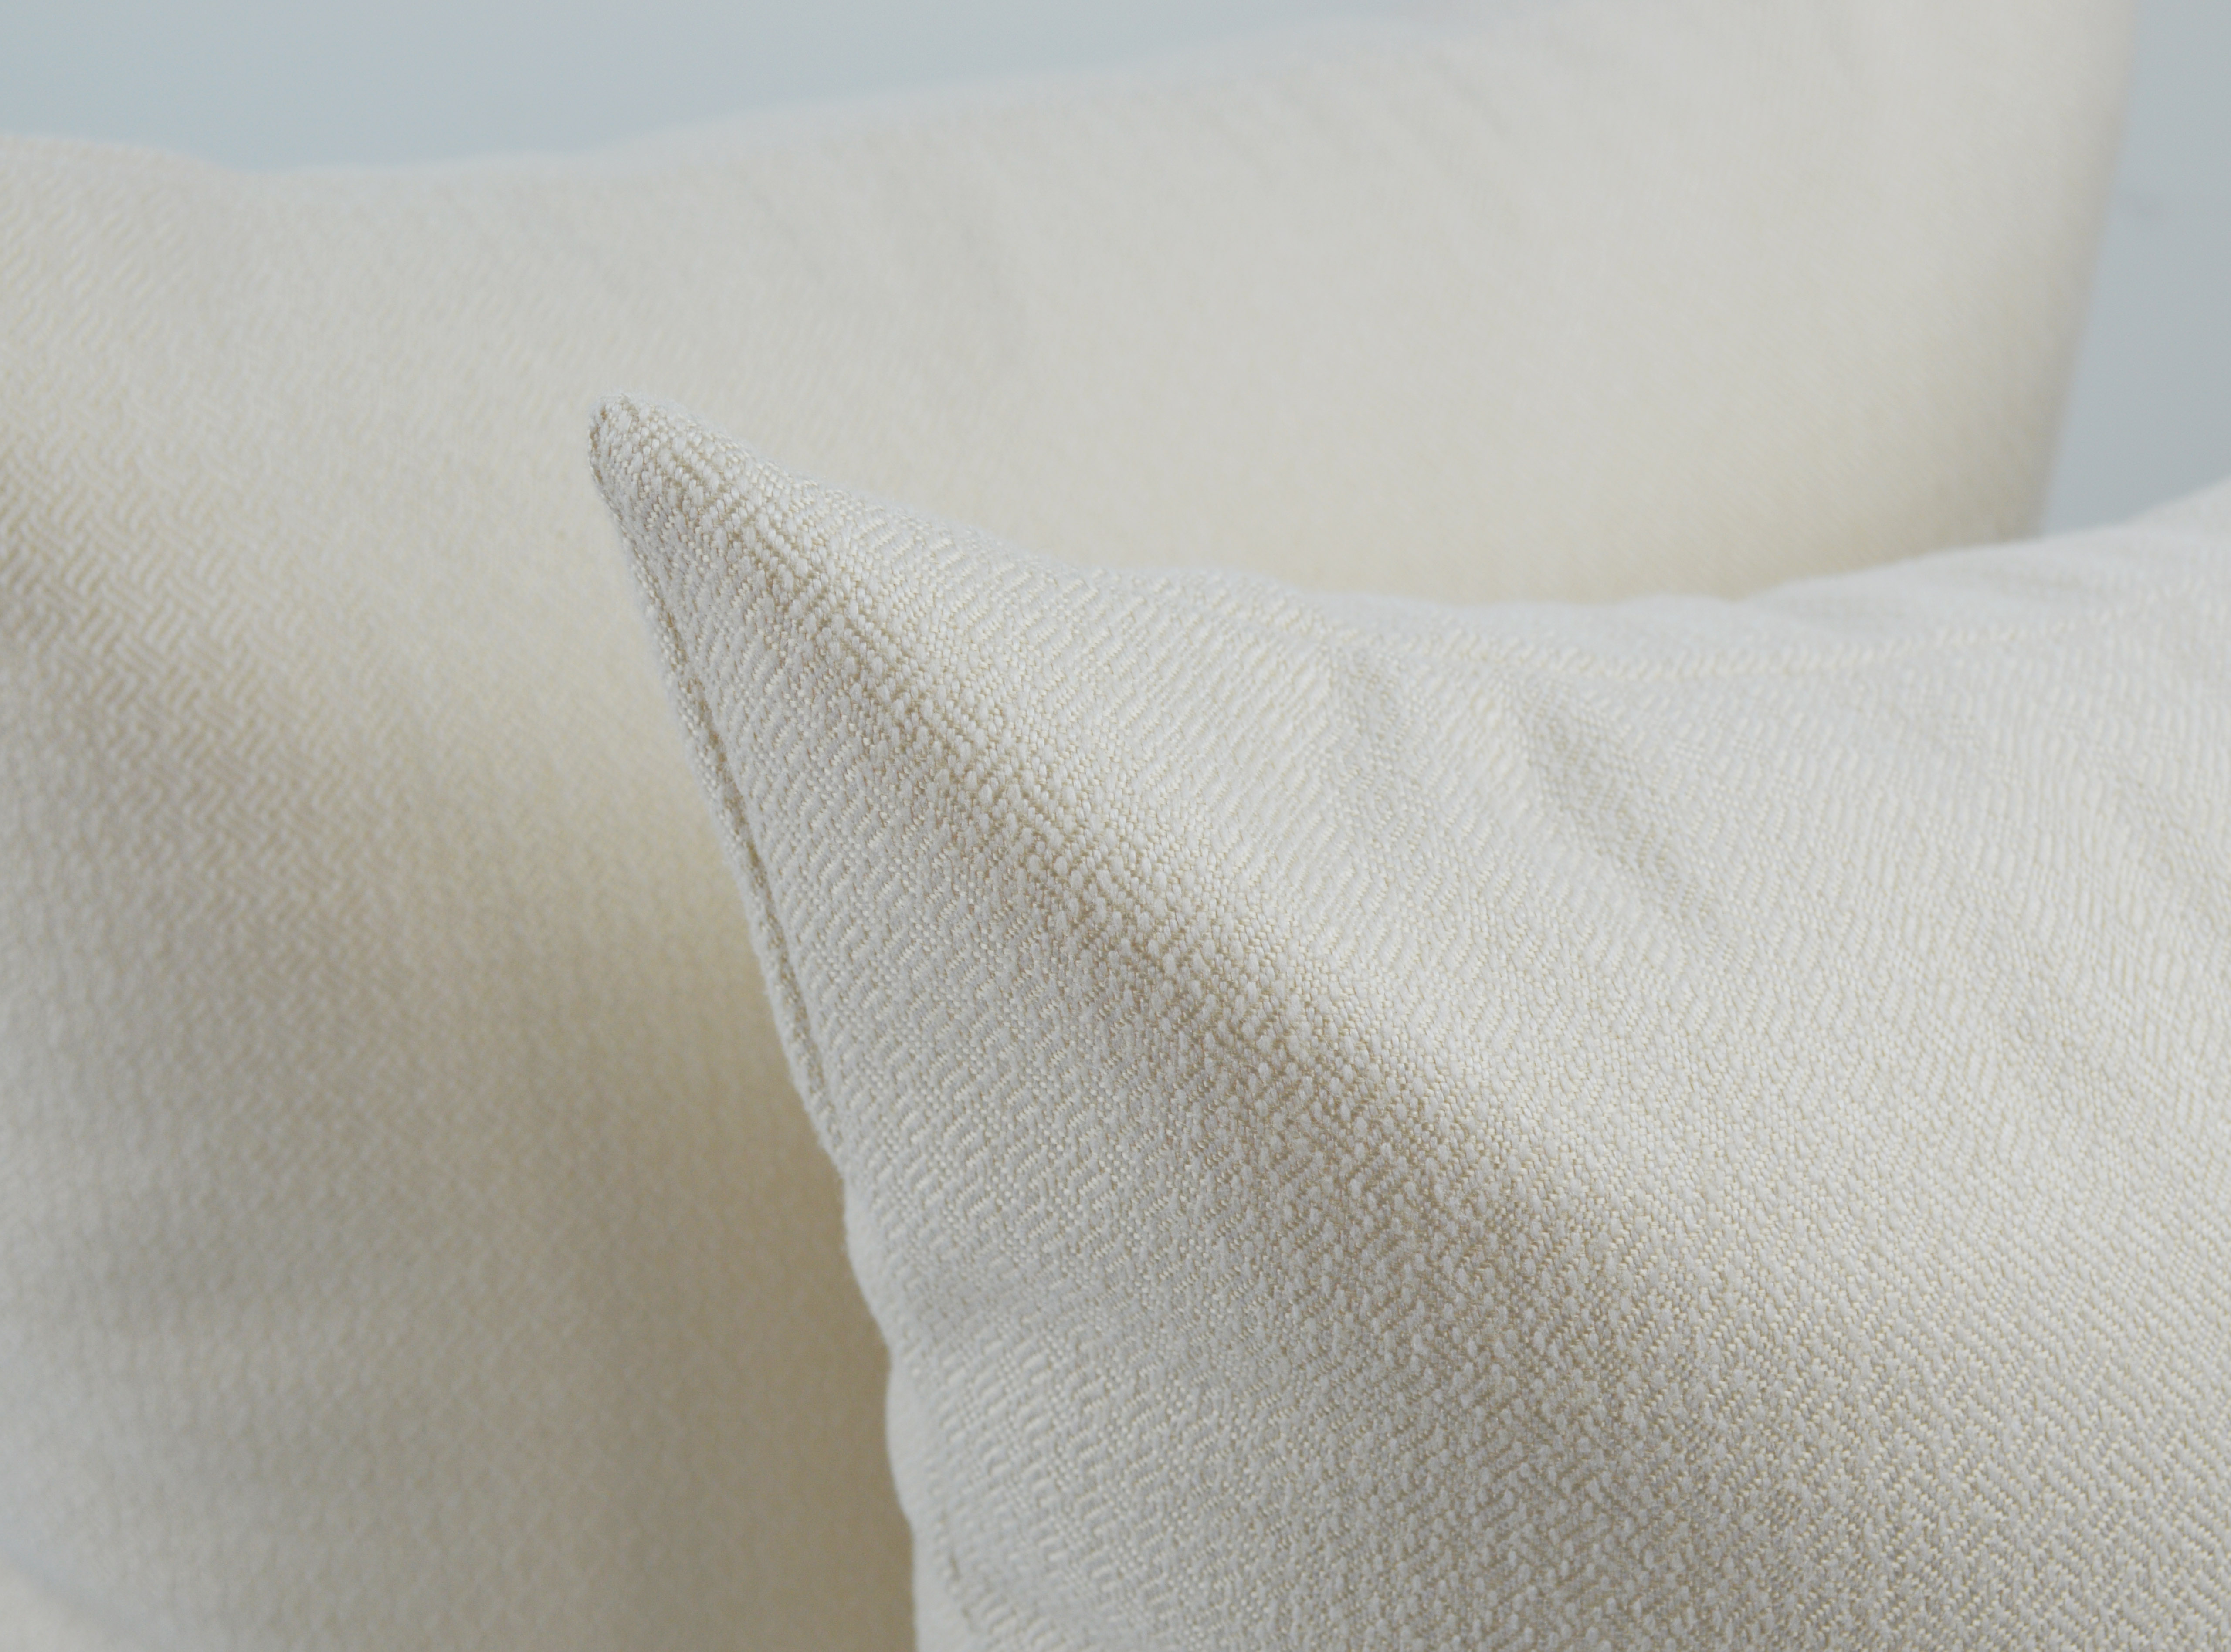 longhui bedding Longhui Bedding Ivory White Throw Pillow Cover, Set Of 2,  White 24A X 24A Decorative Lattice Pattern Sham Pillowcase For 24 Inch